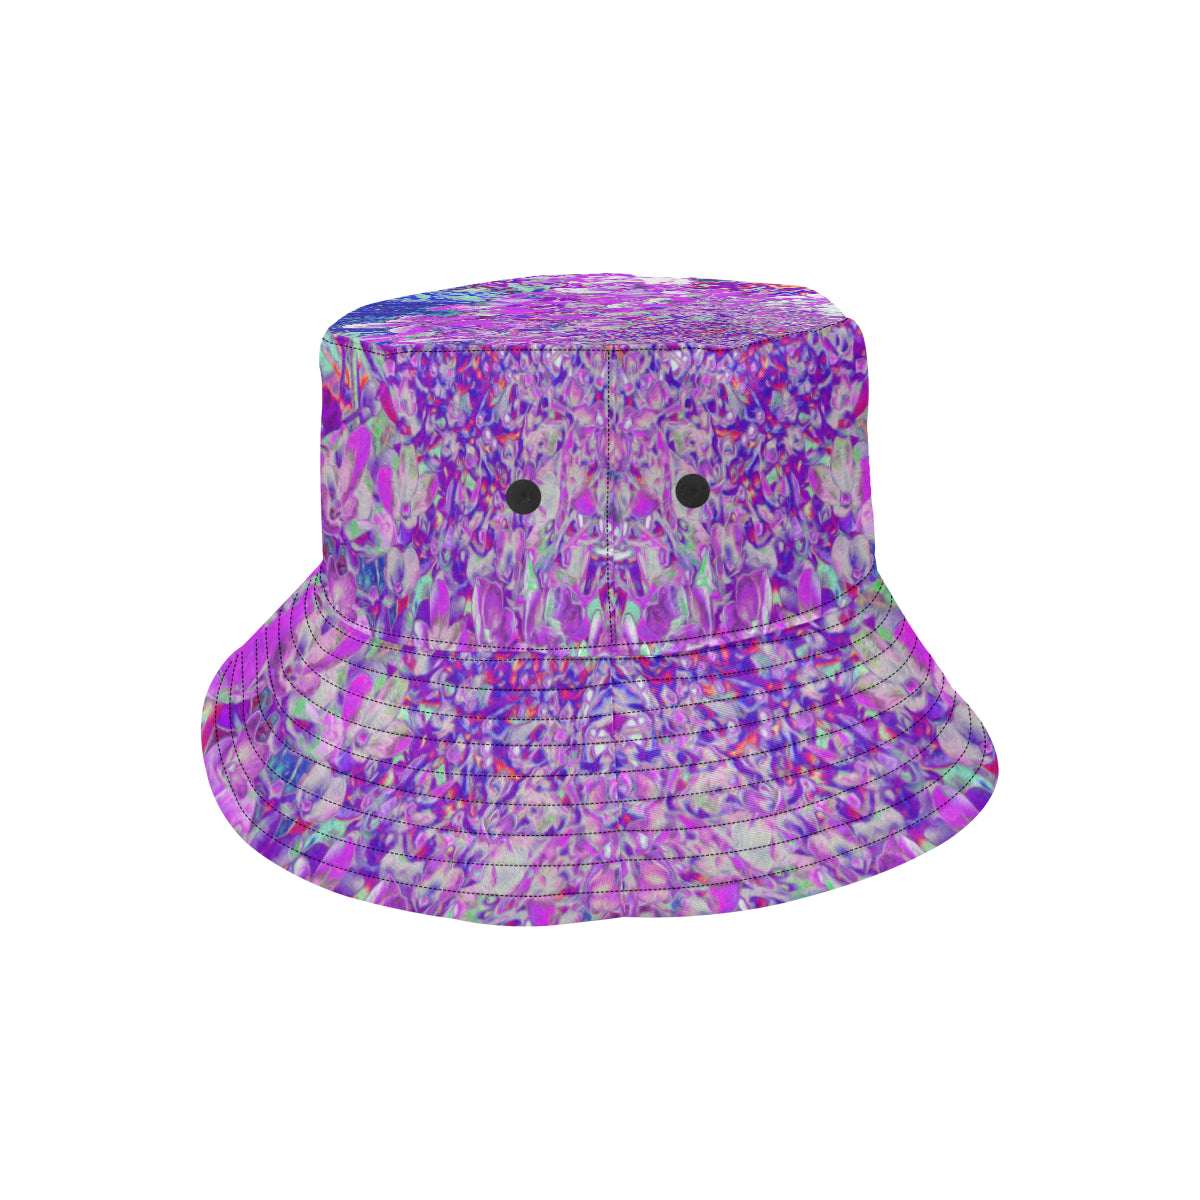 Bucket Hats, Elegant Purple and Blue Limelight Hydrangea